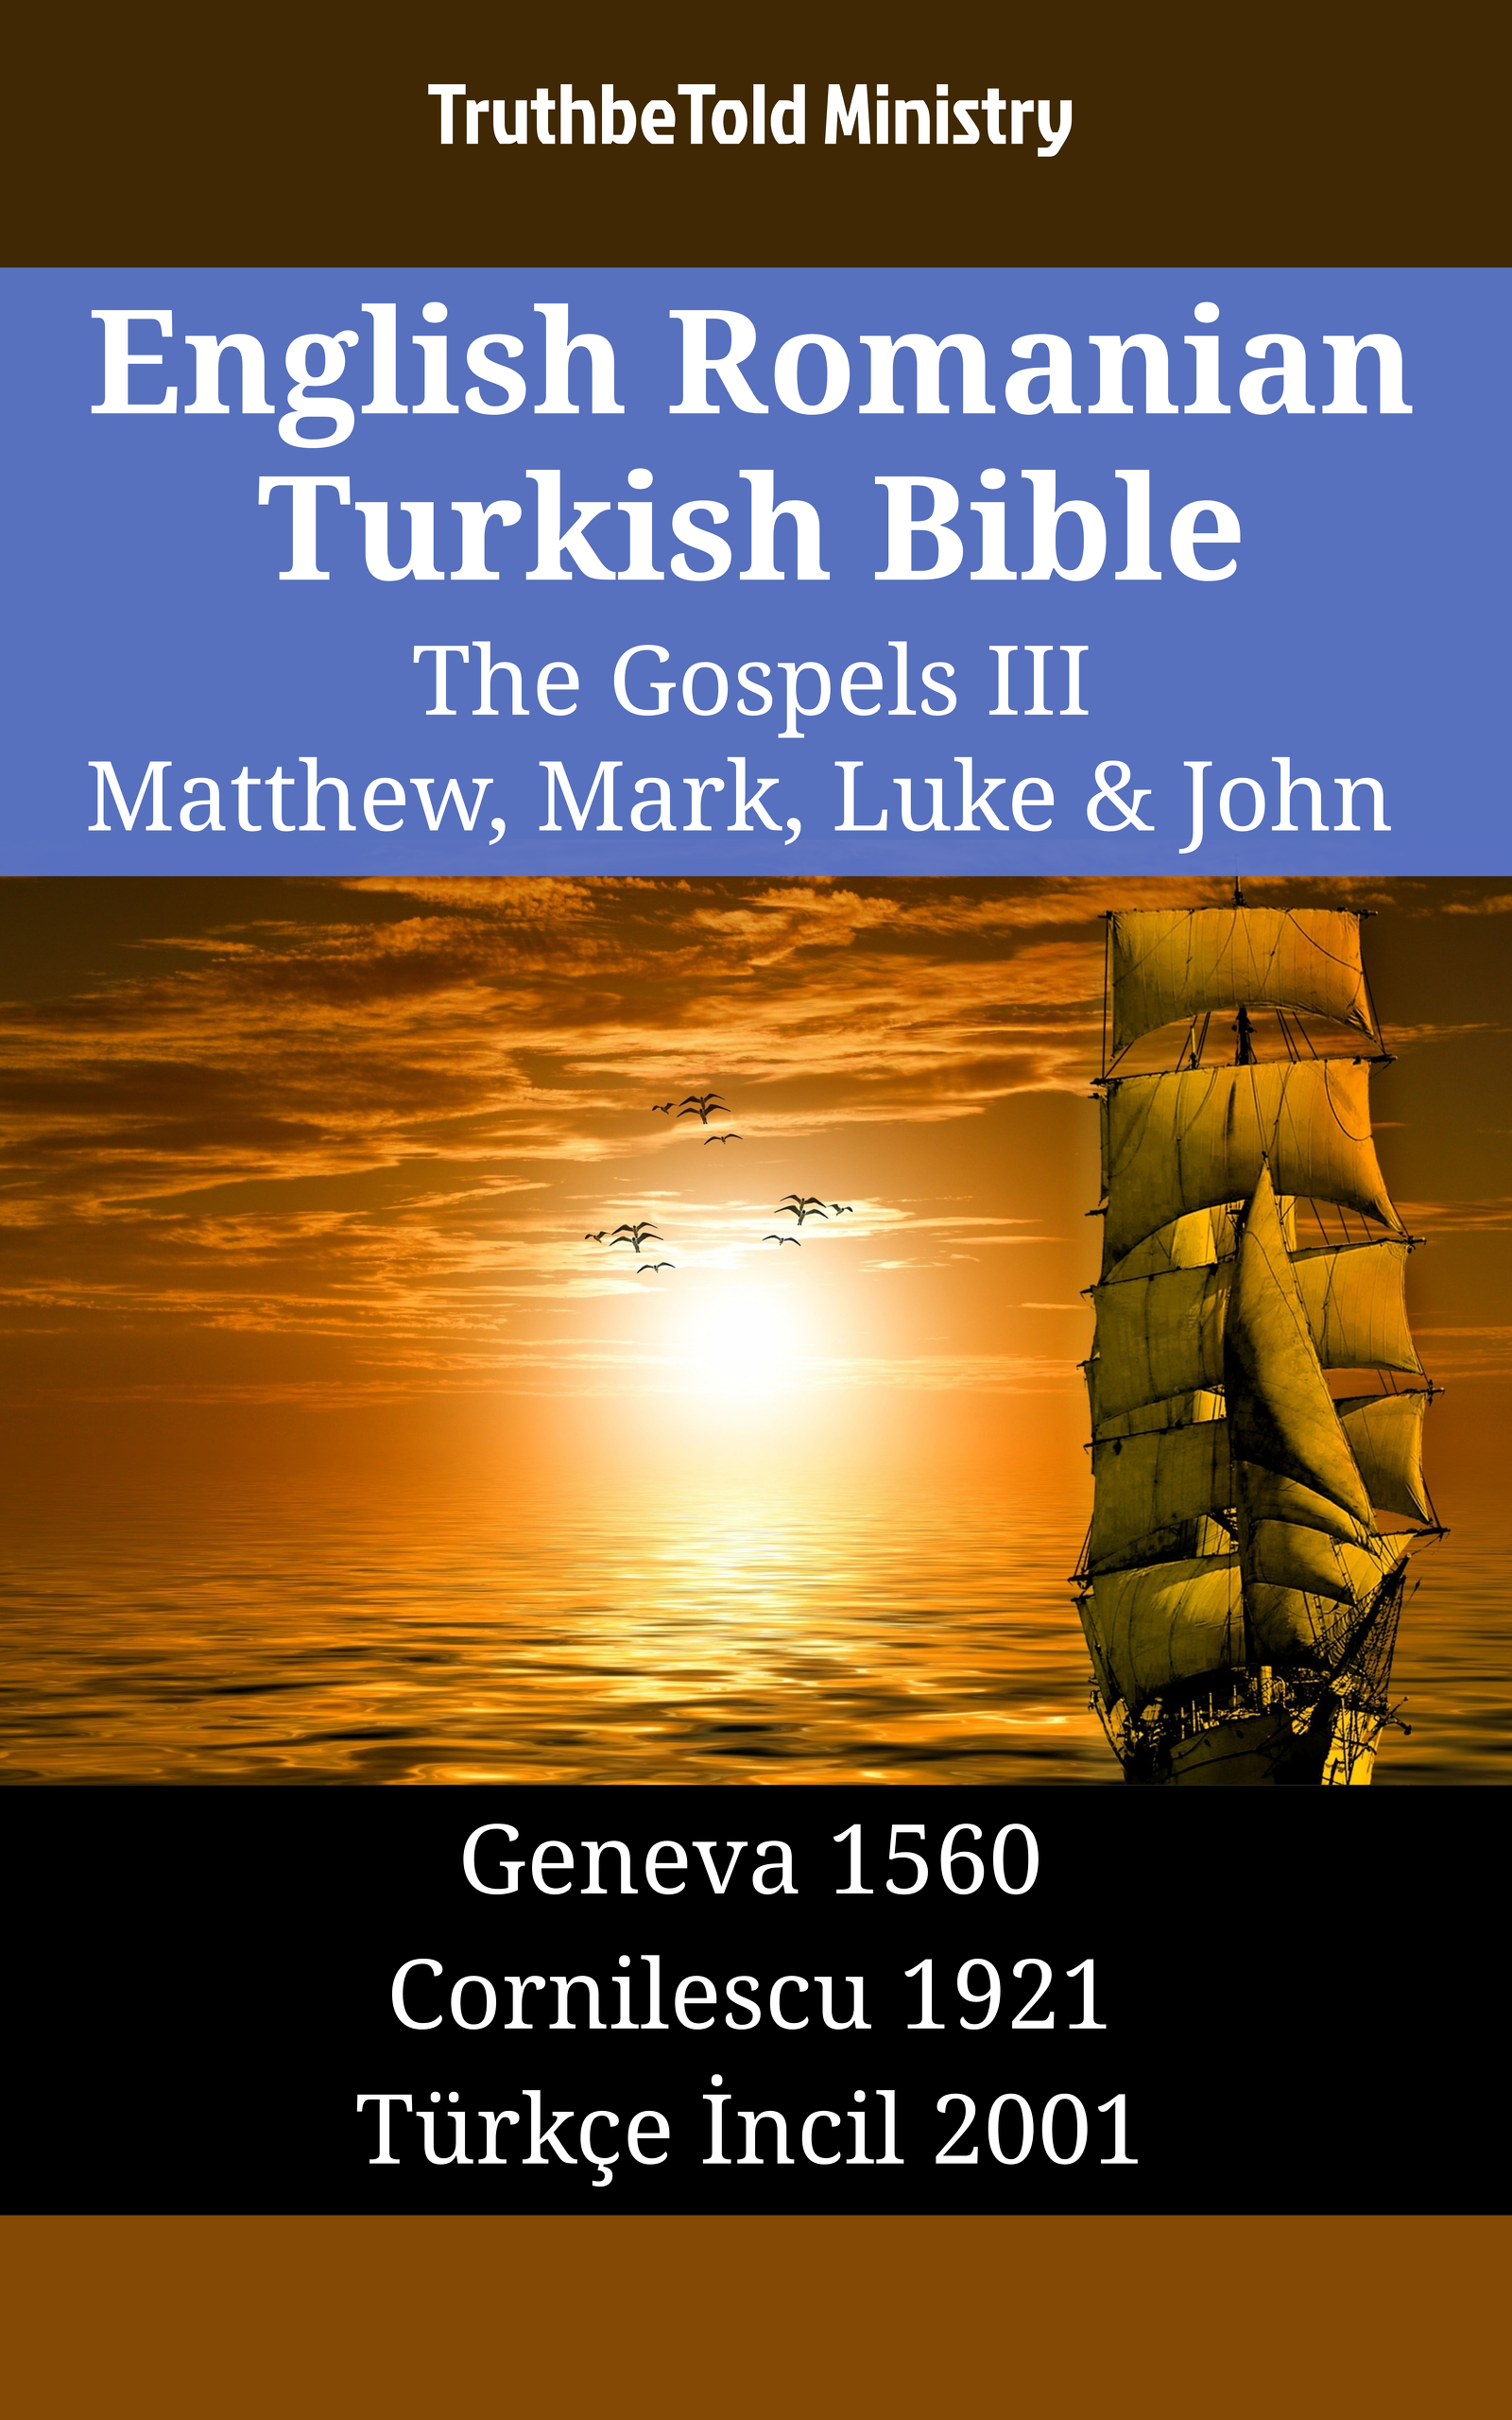 English Romanian Turkish Bible - The Gospels III - Matthew, Mark, Luke & John